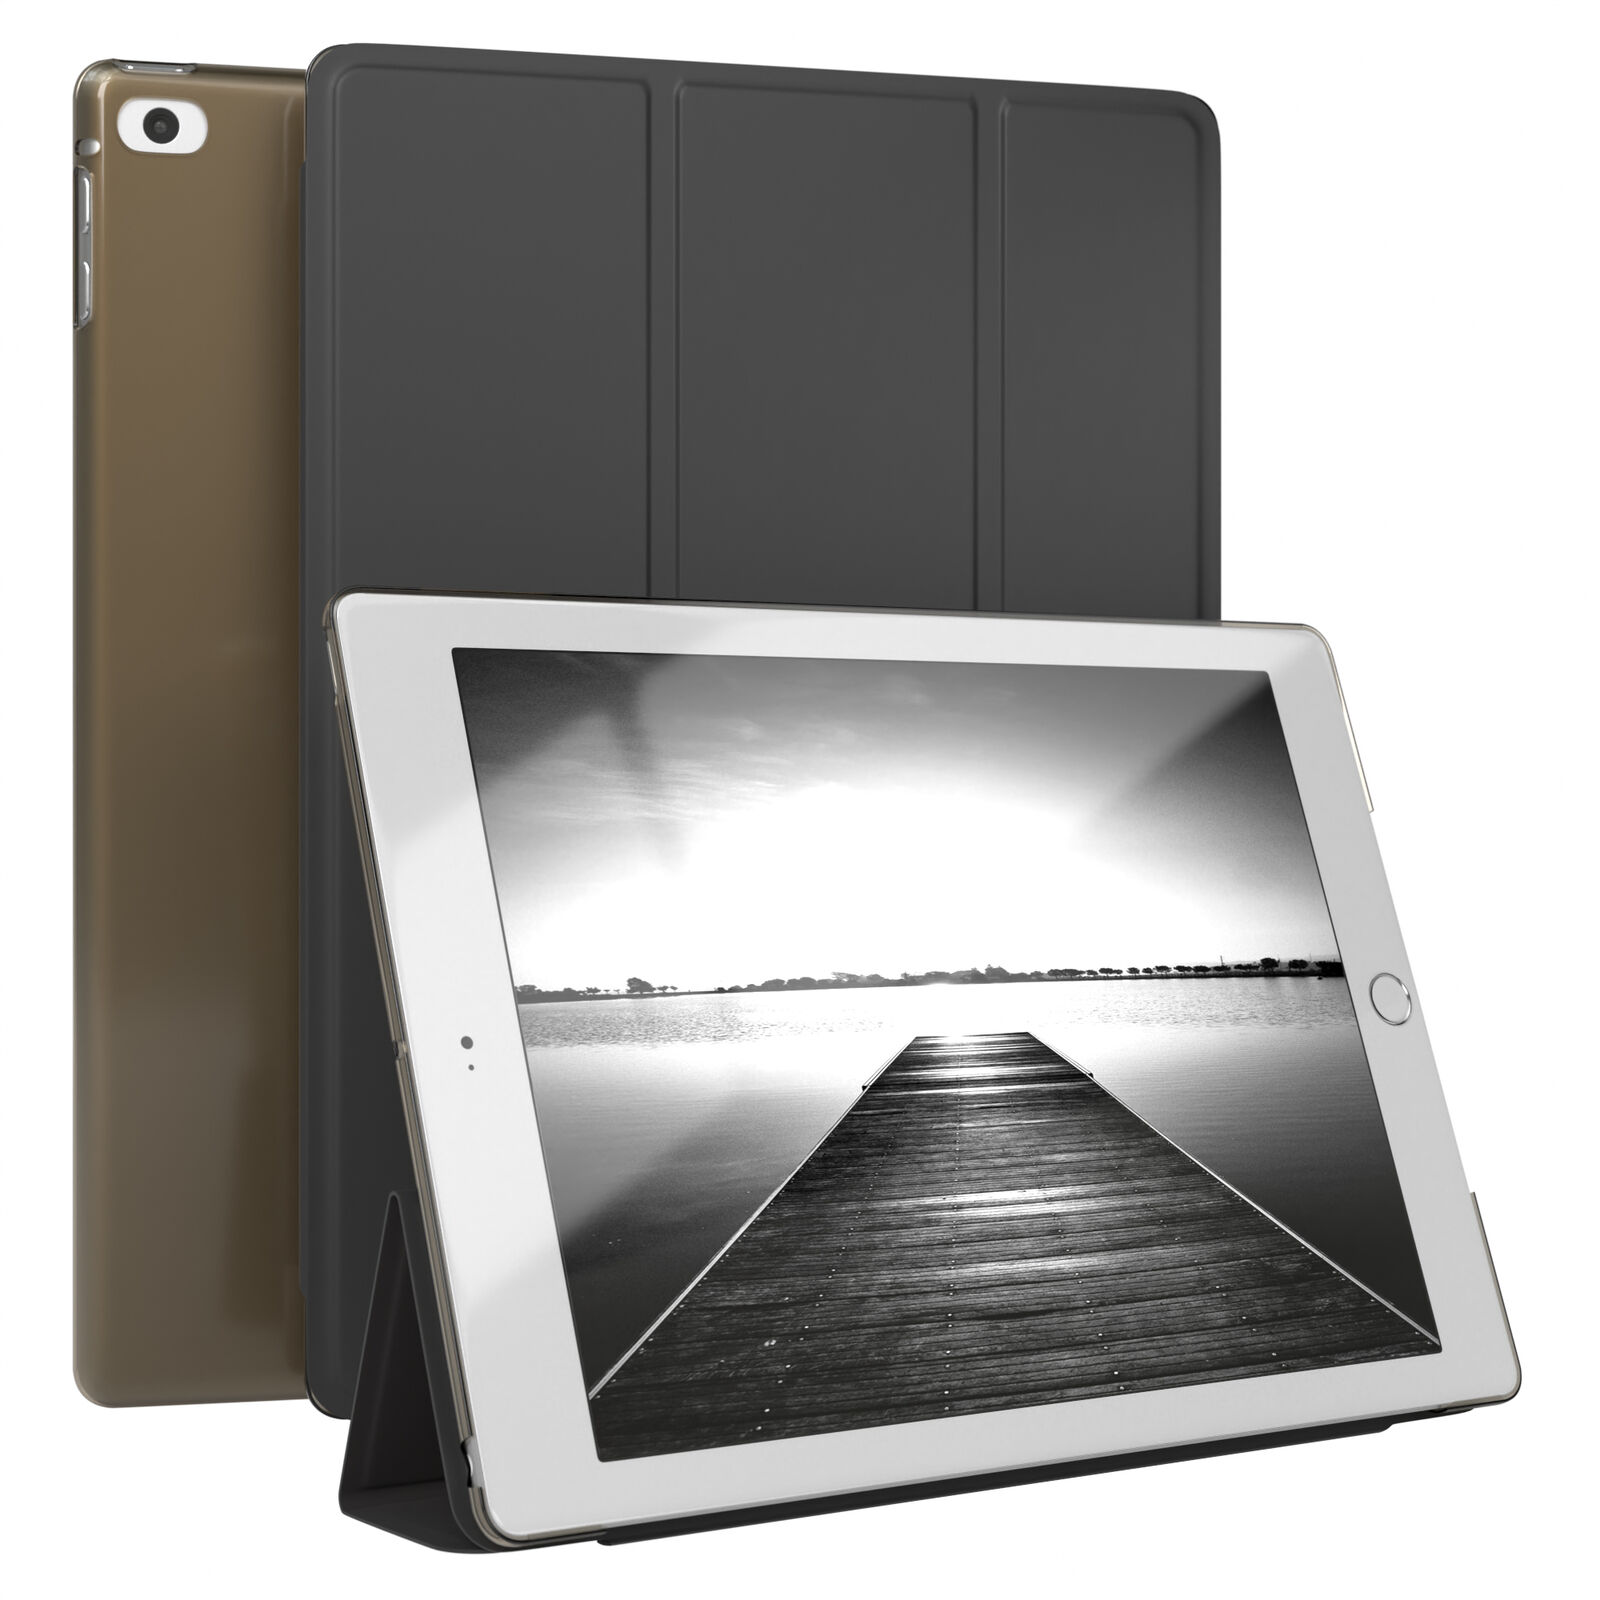 EAZY CASE for Apple iPad 5 / 6 / Air 1 / Air 2 case smartcase tablet bag